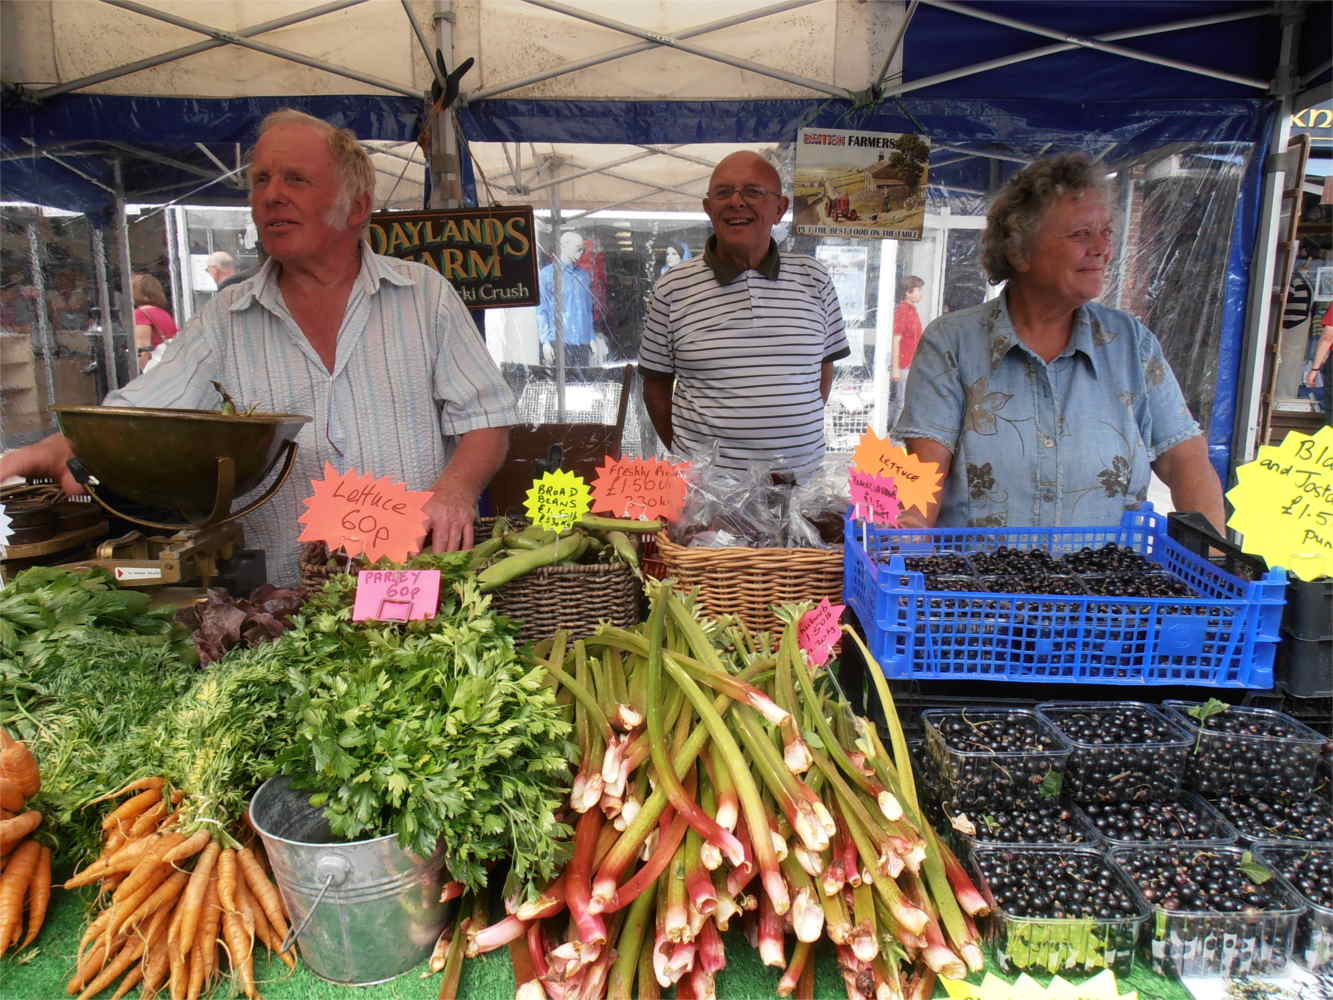 Daylands stall at Shoreham farmers' market